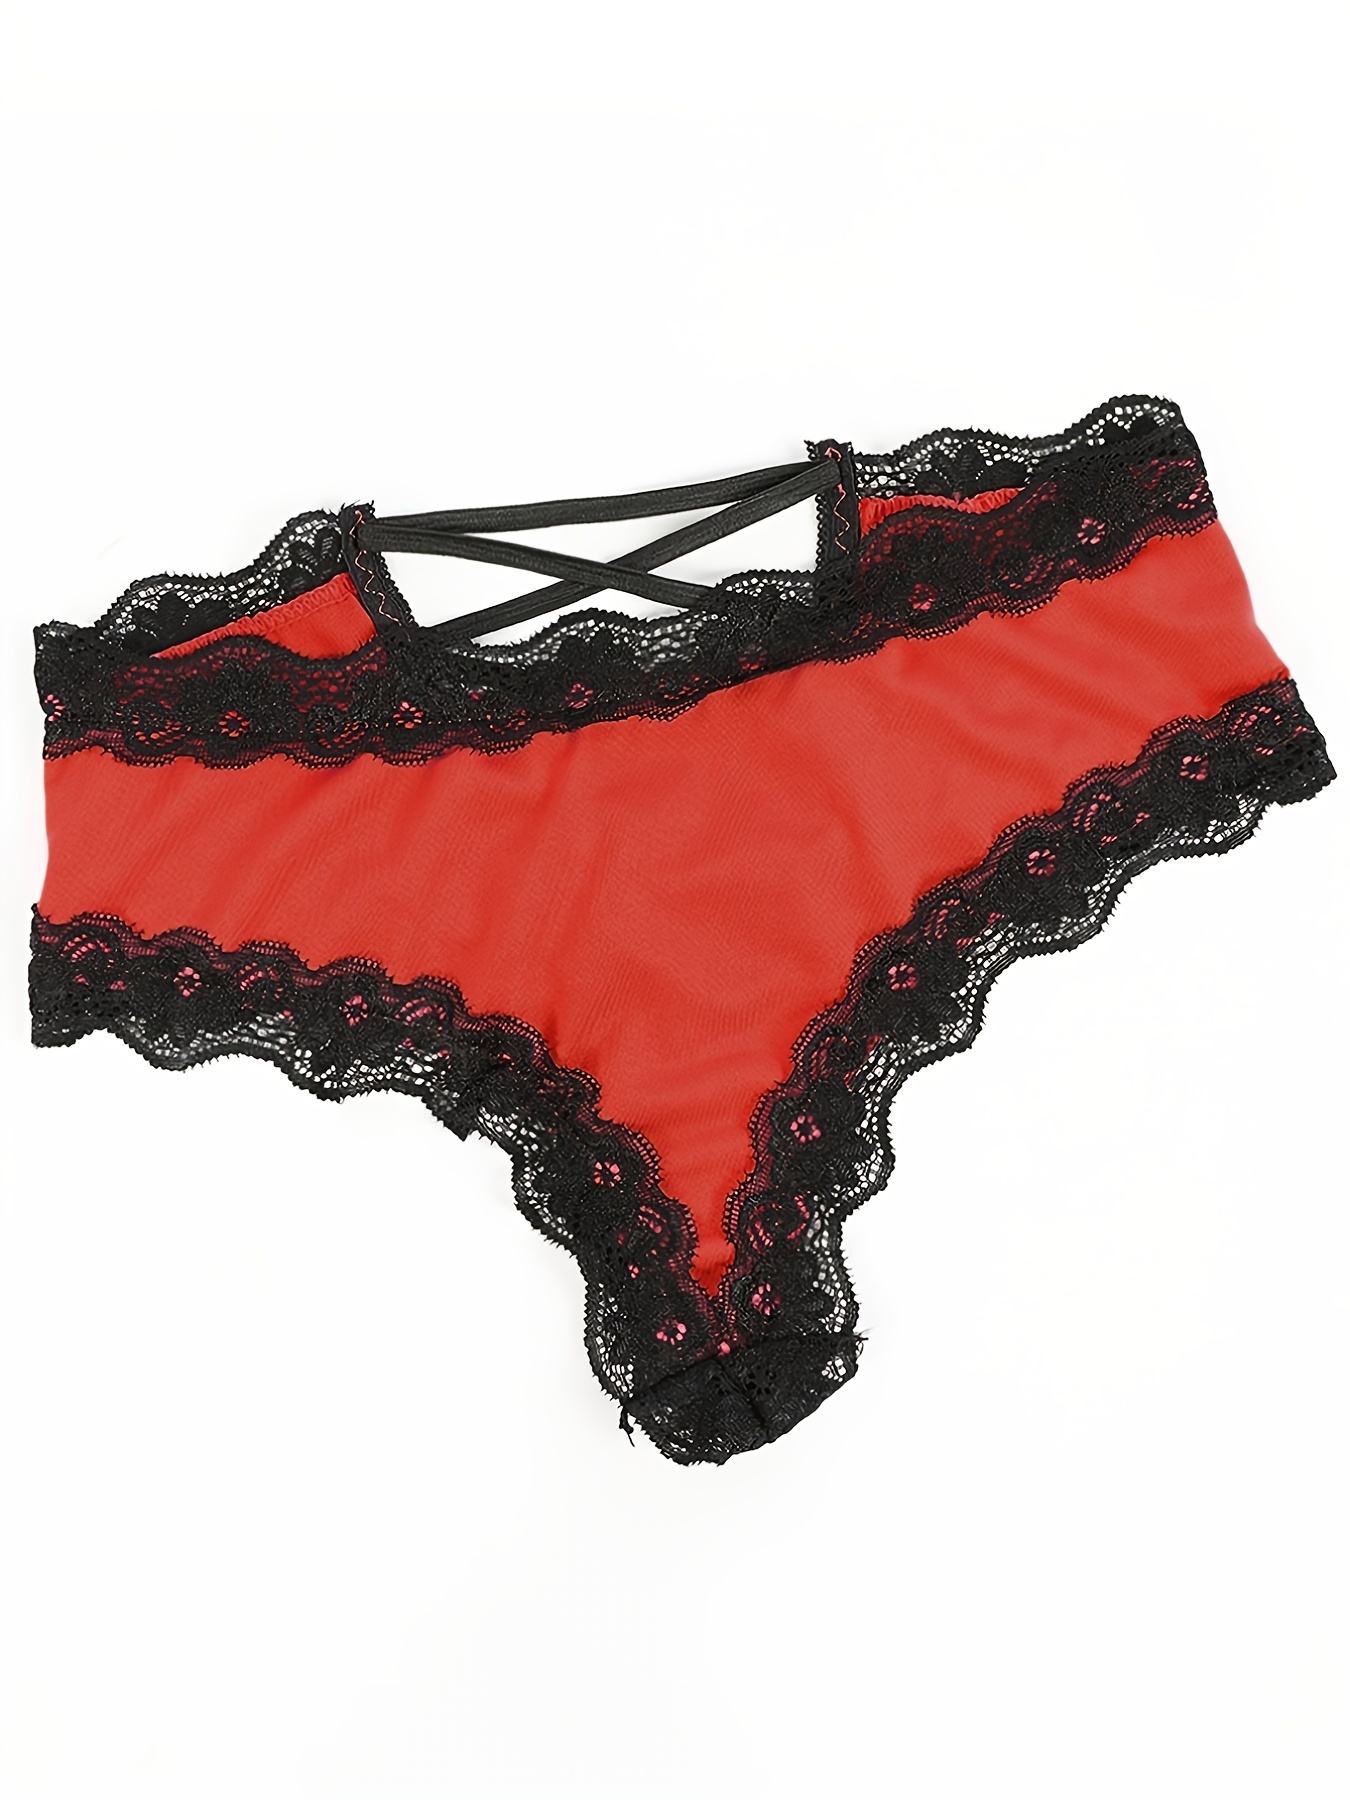 Undies.com Women's Microfiber Hipster with Lace 6 Piece Underwear -  ShopStyle Panties